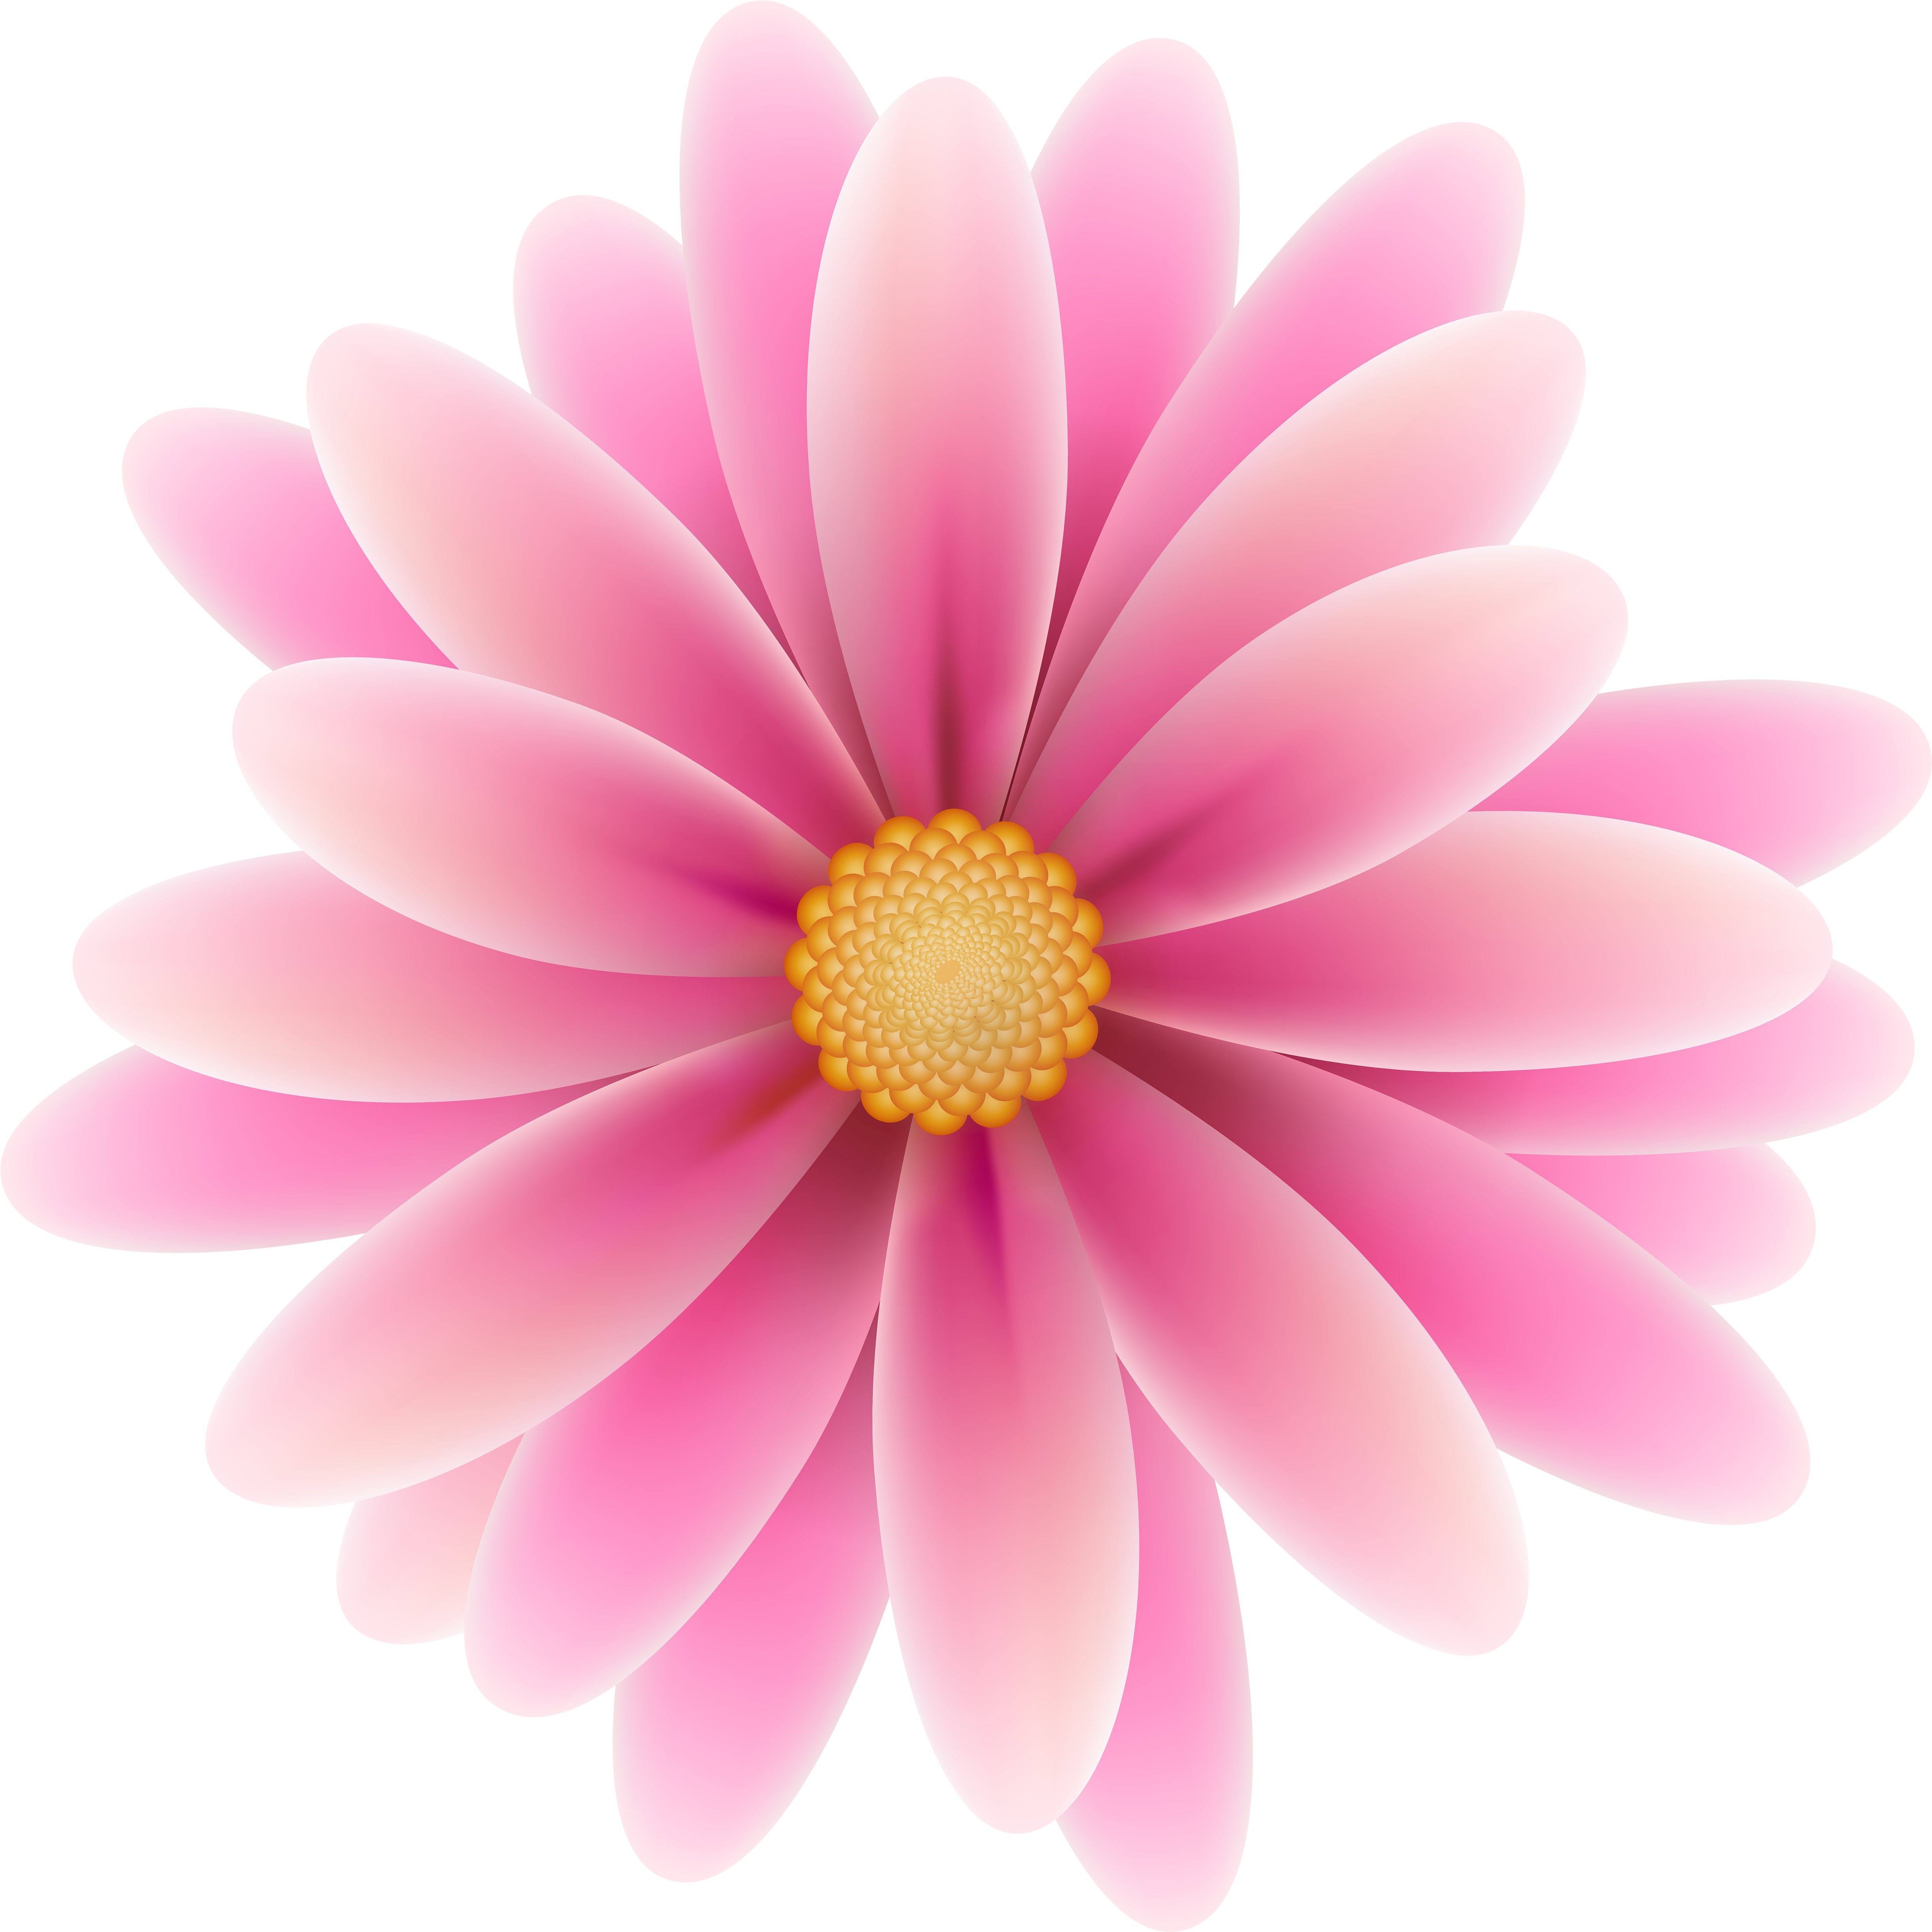 Pink Flower Clip Art Image - Pink Flower Clipart Png (5000x5000)